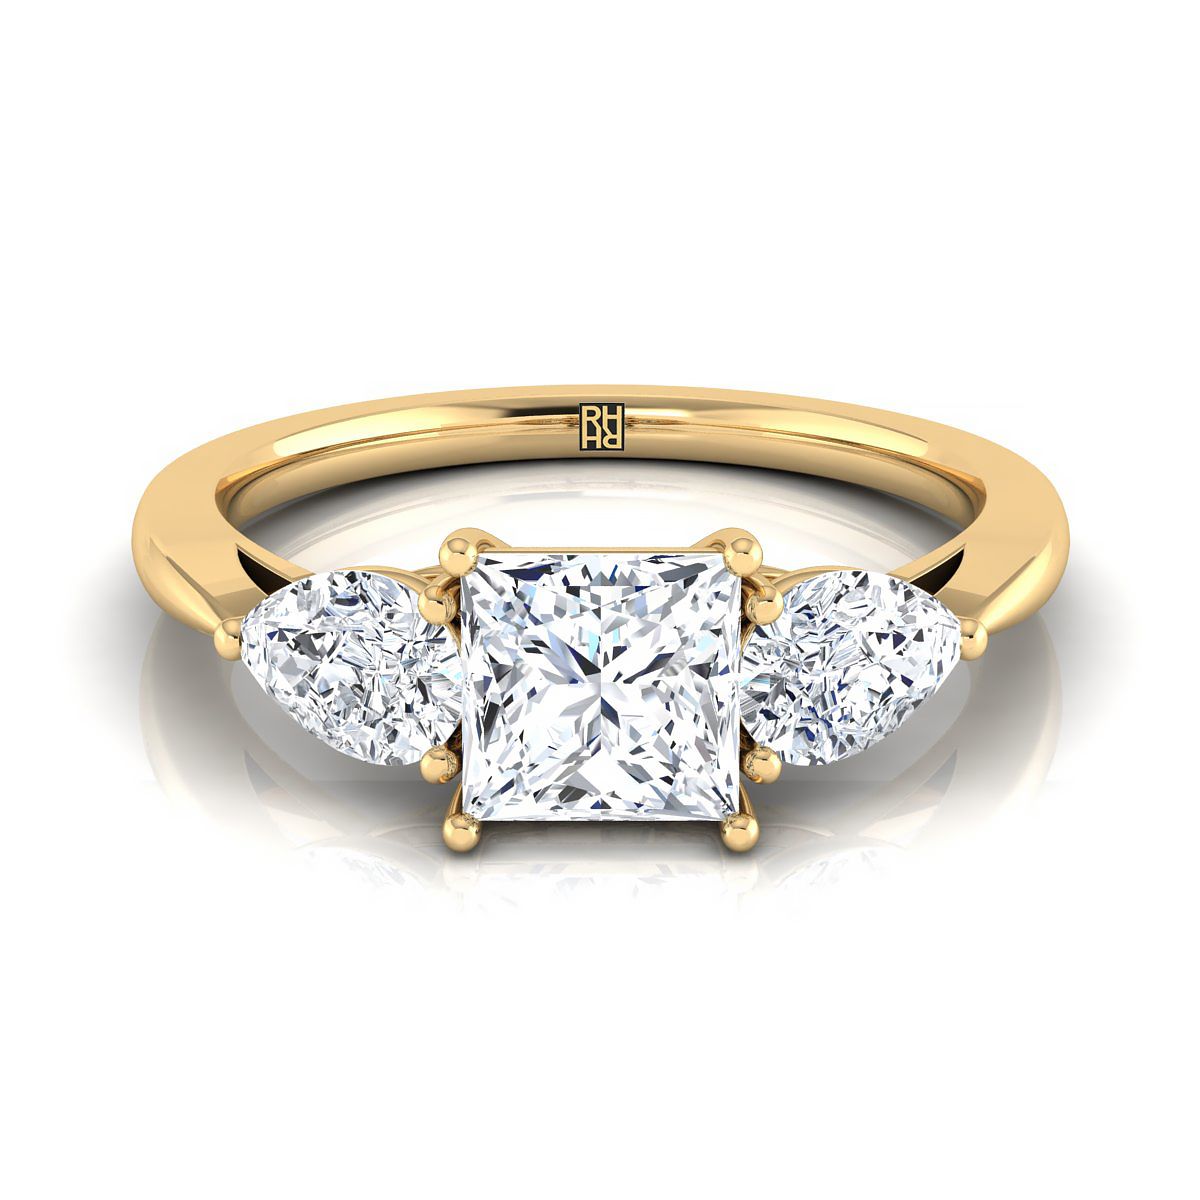 18K Yellow Gold Princess Cut Diamond Perfectly Matched Pear Shaped Three Diamond Engagement Ring -7/8ctw